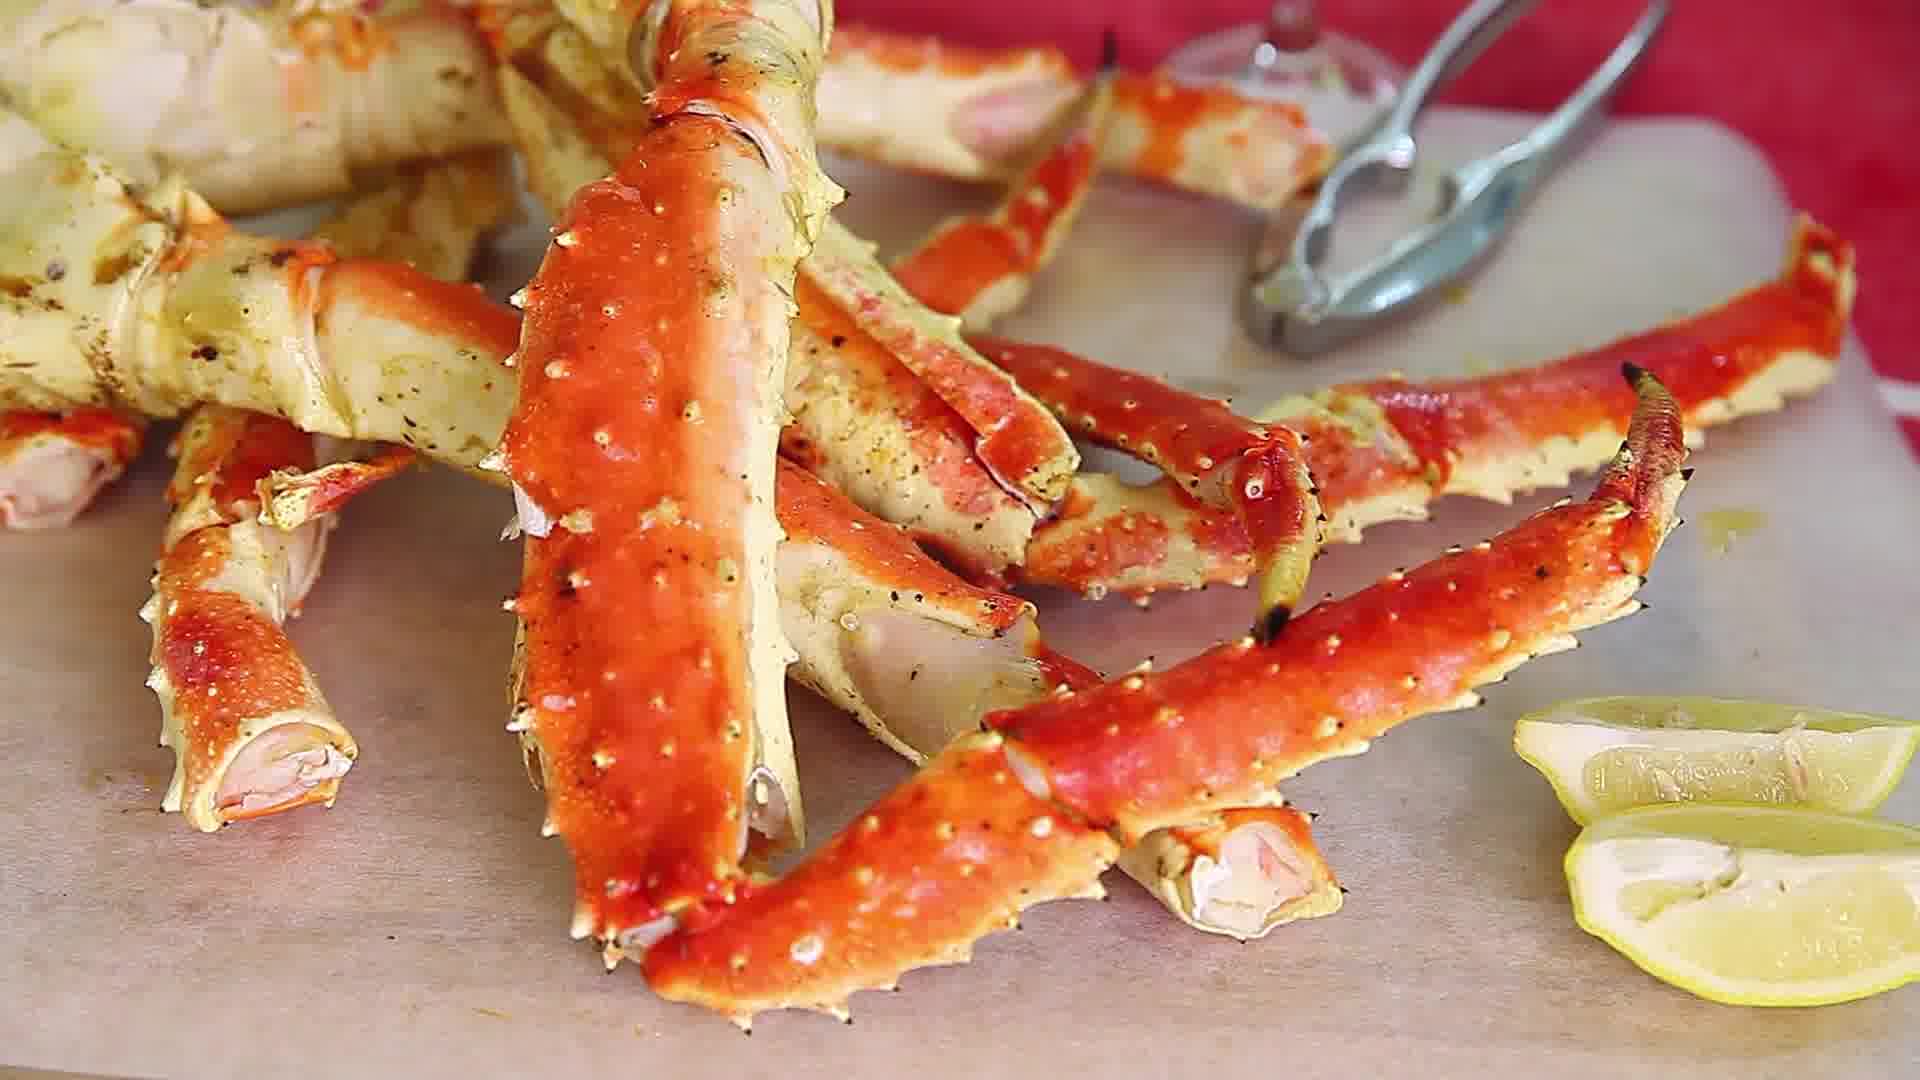 Alaskan Snow Crab. Gulf Shores. Crab legs, Snow crab